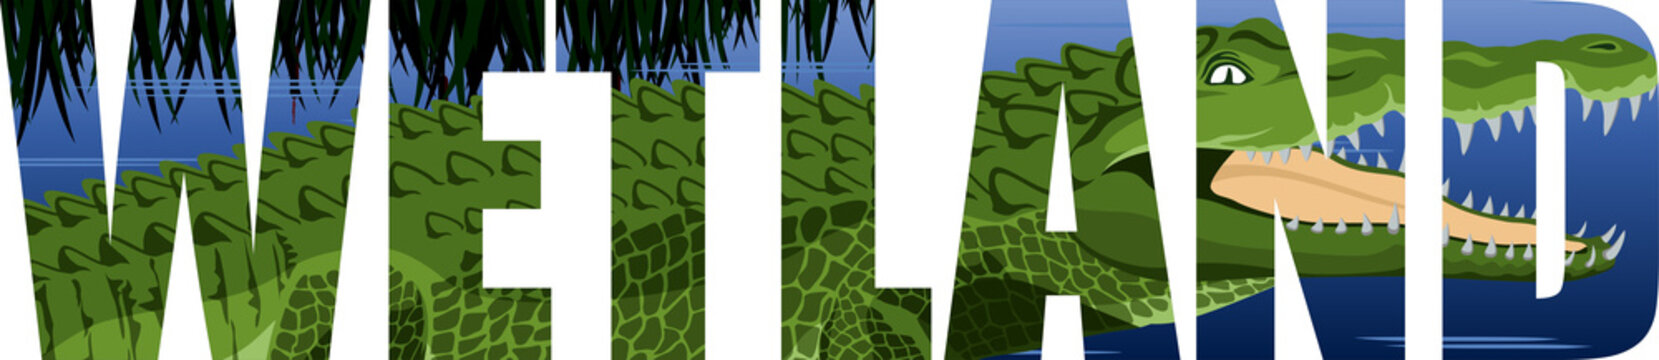 vector wetland word with gator crocodile illustration